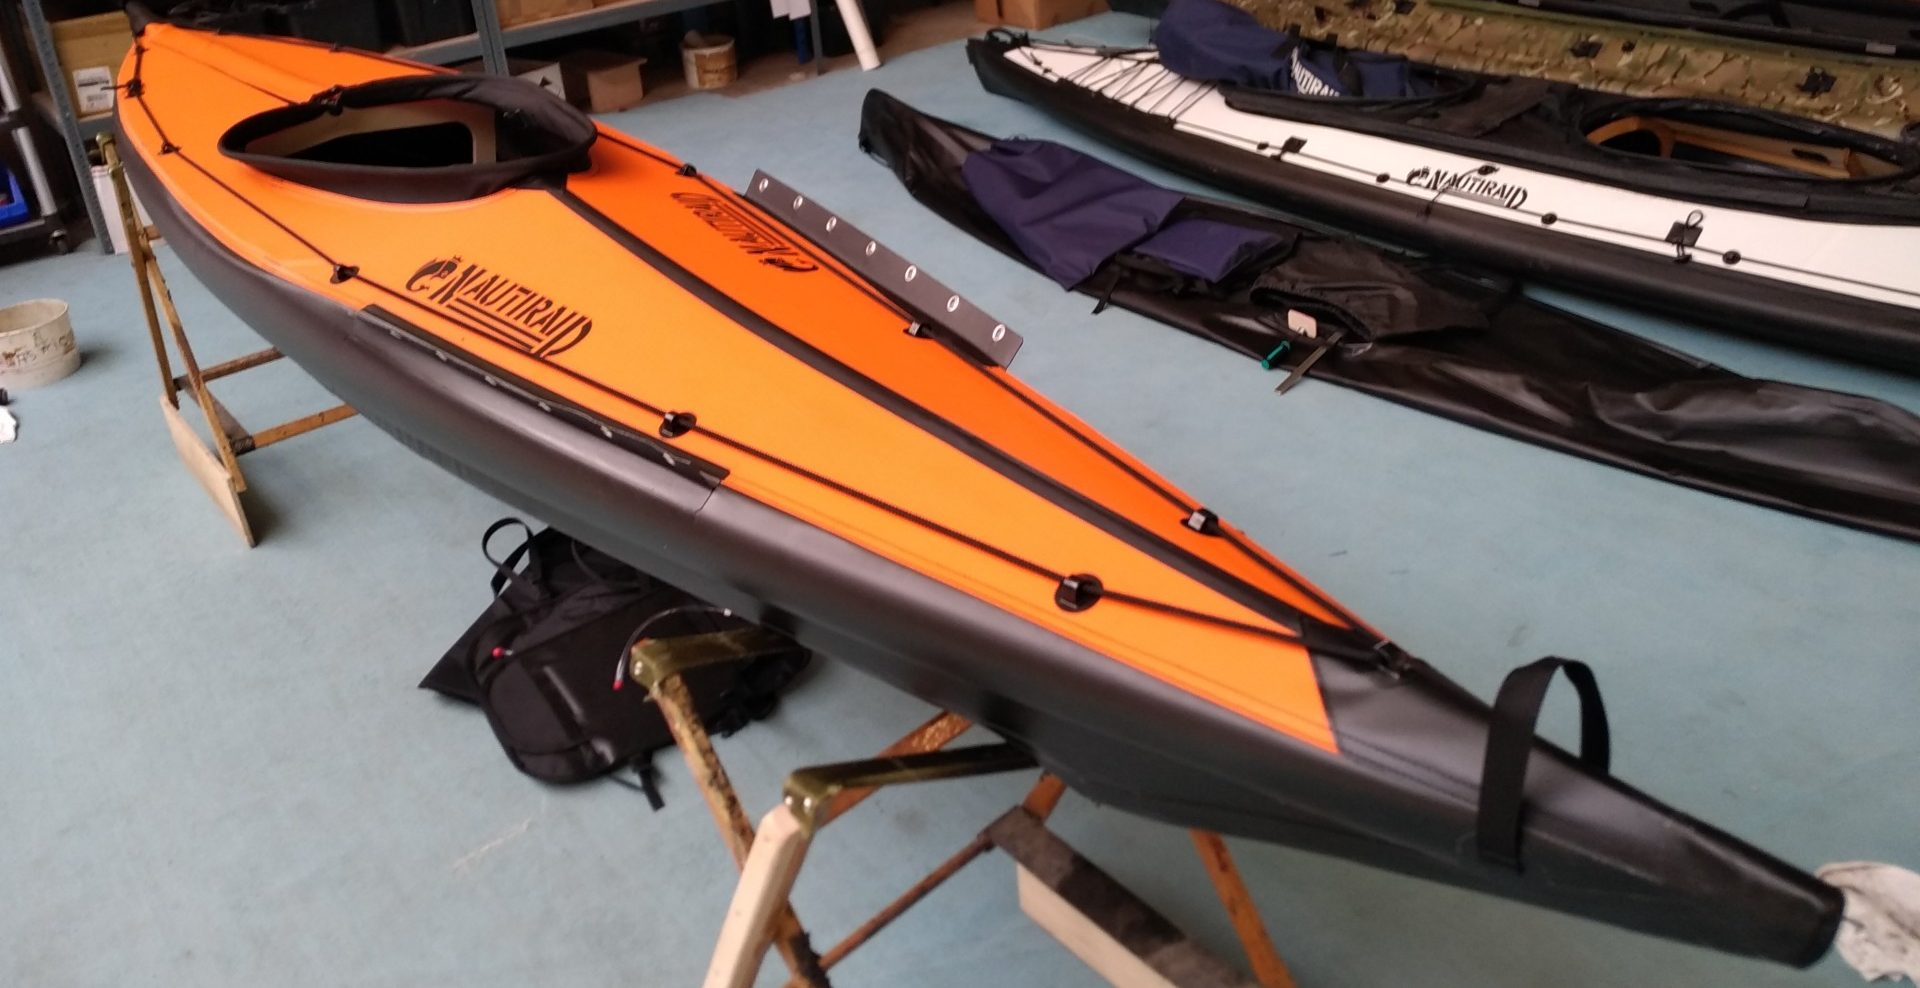 Kayaks pliants Nautiraid : nouveau coloris orange